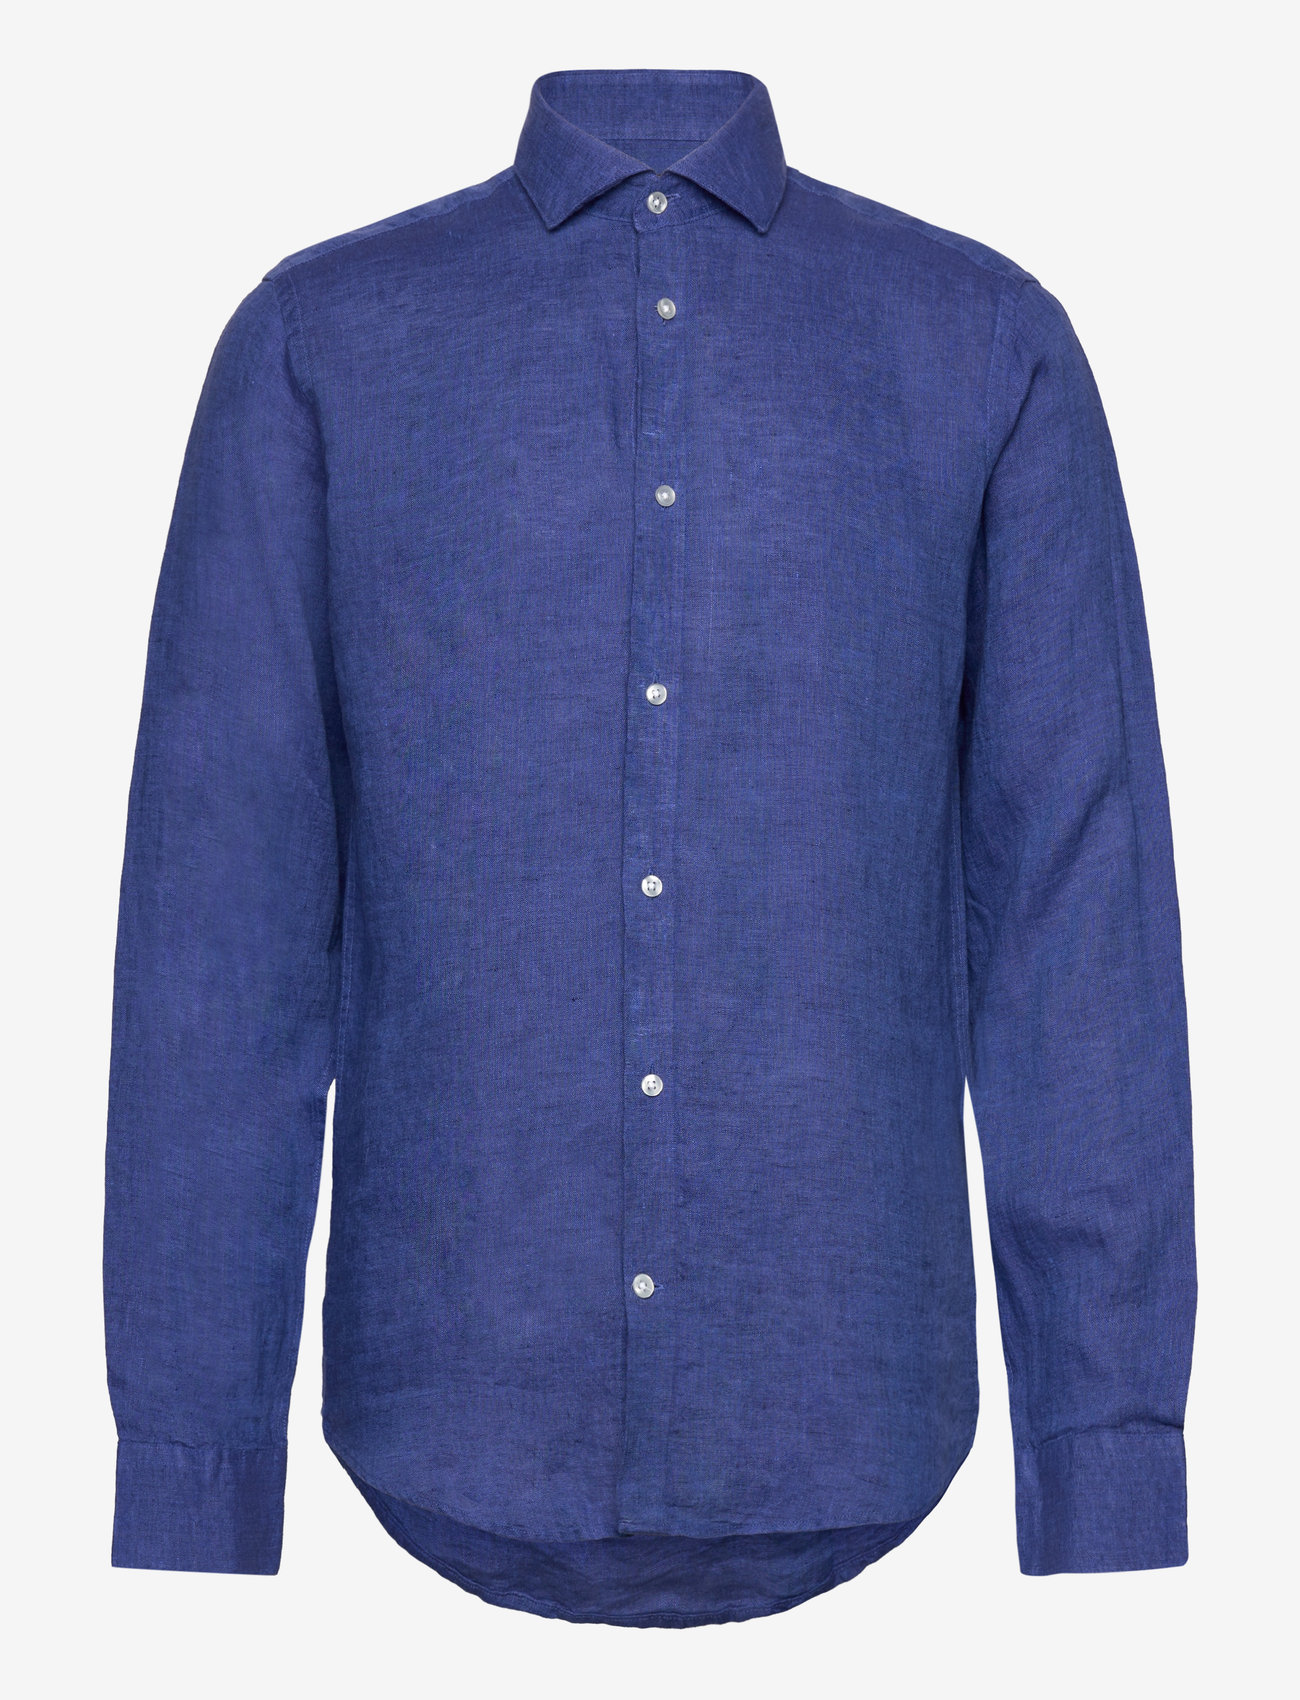 Bruun & Stengade - BS Bilbao Casual Modern Fit Shirt - hørskjorter - blue - 0